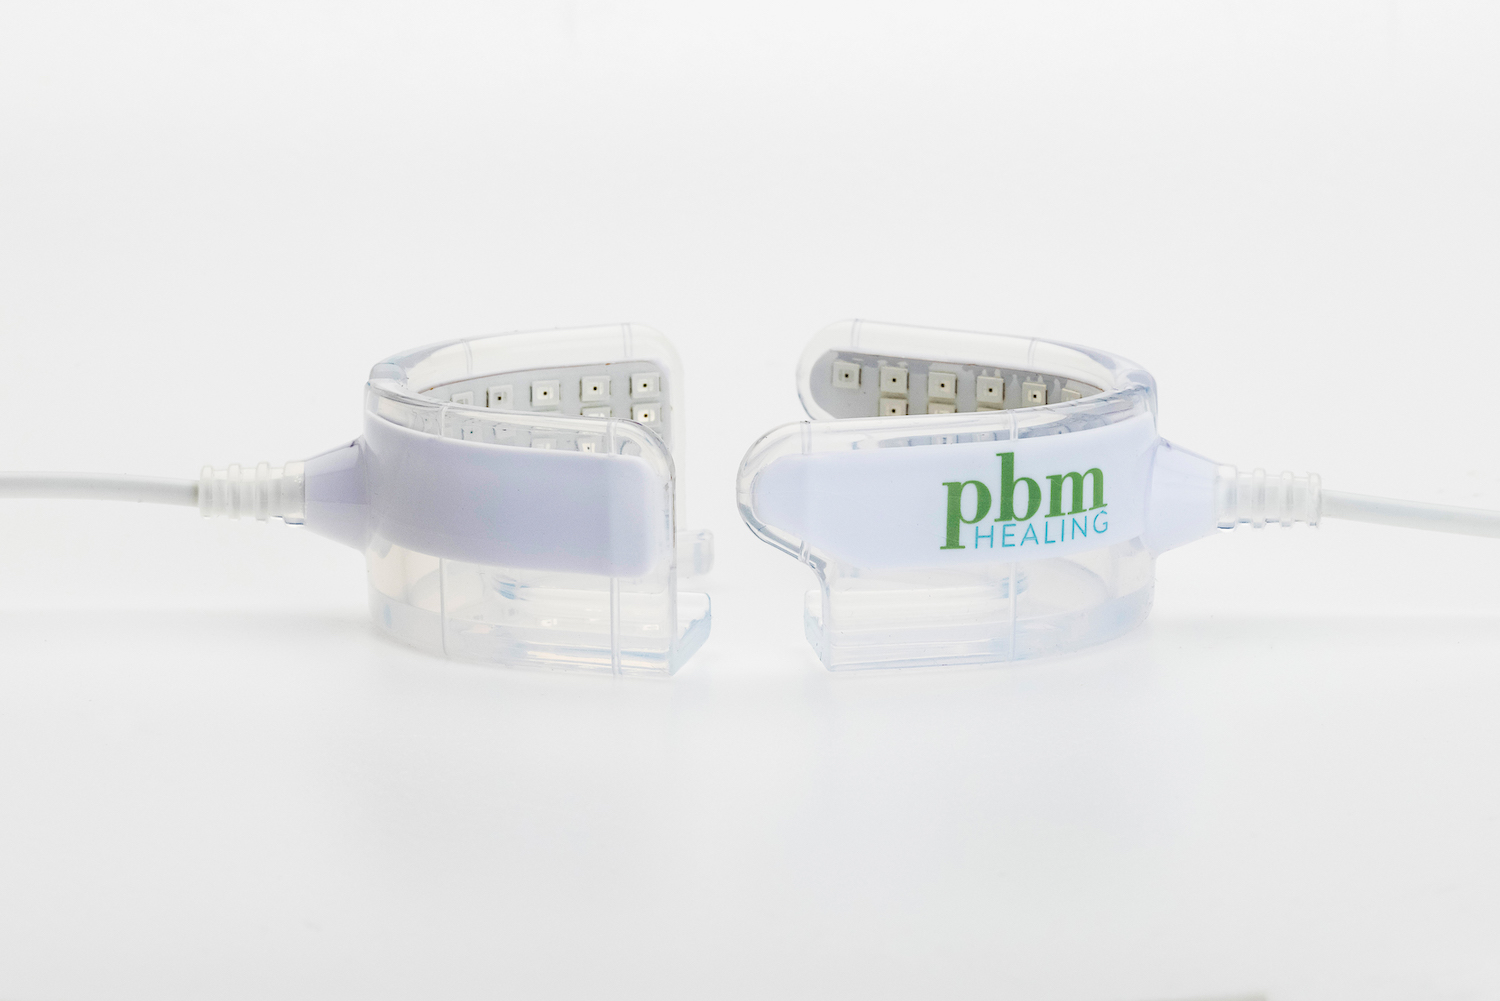 pbm healing インビザライン 矯正加速装置 光加速装置 | tspea.org